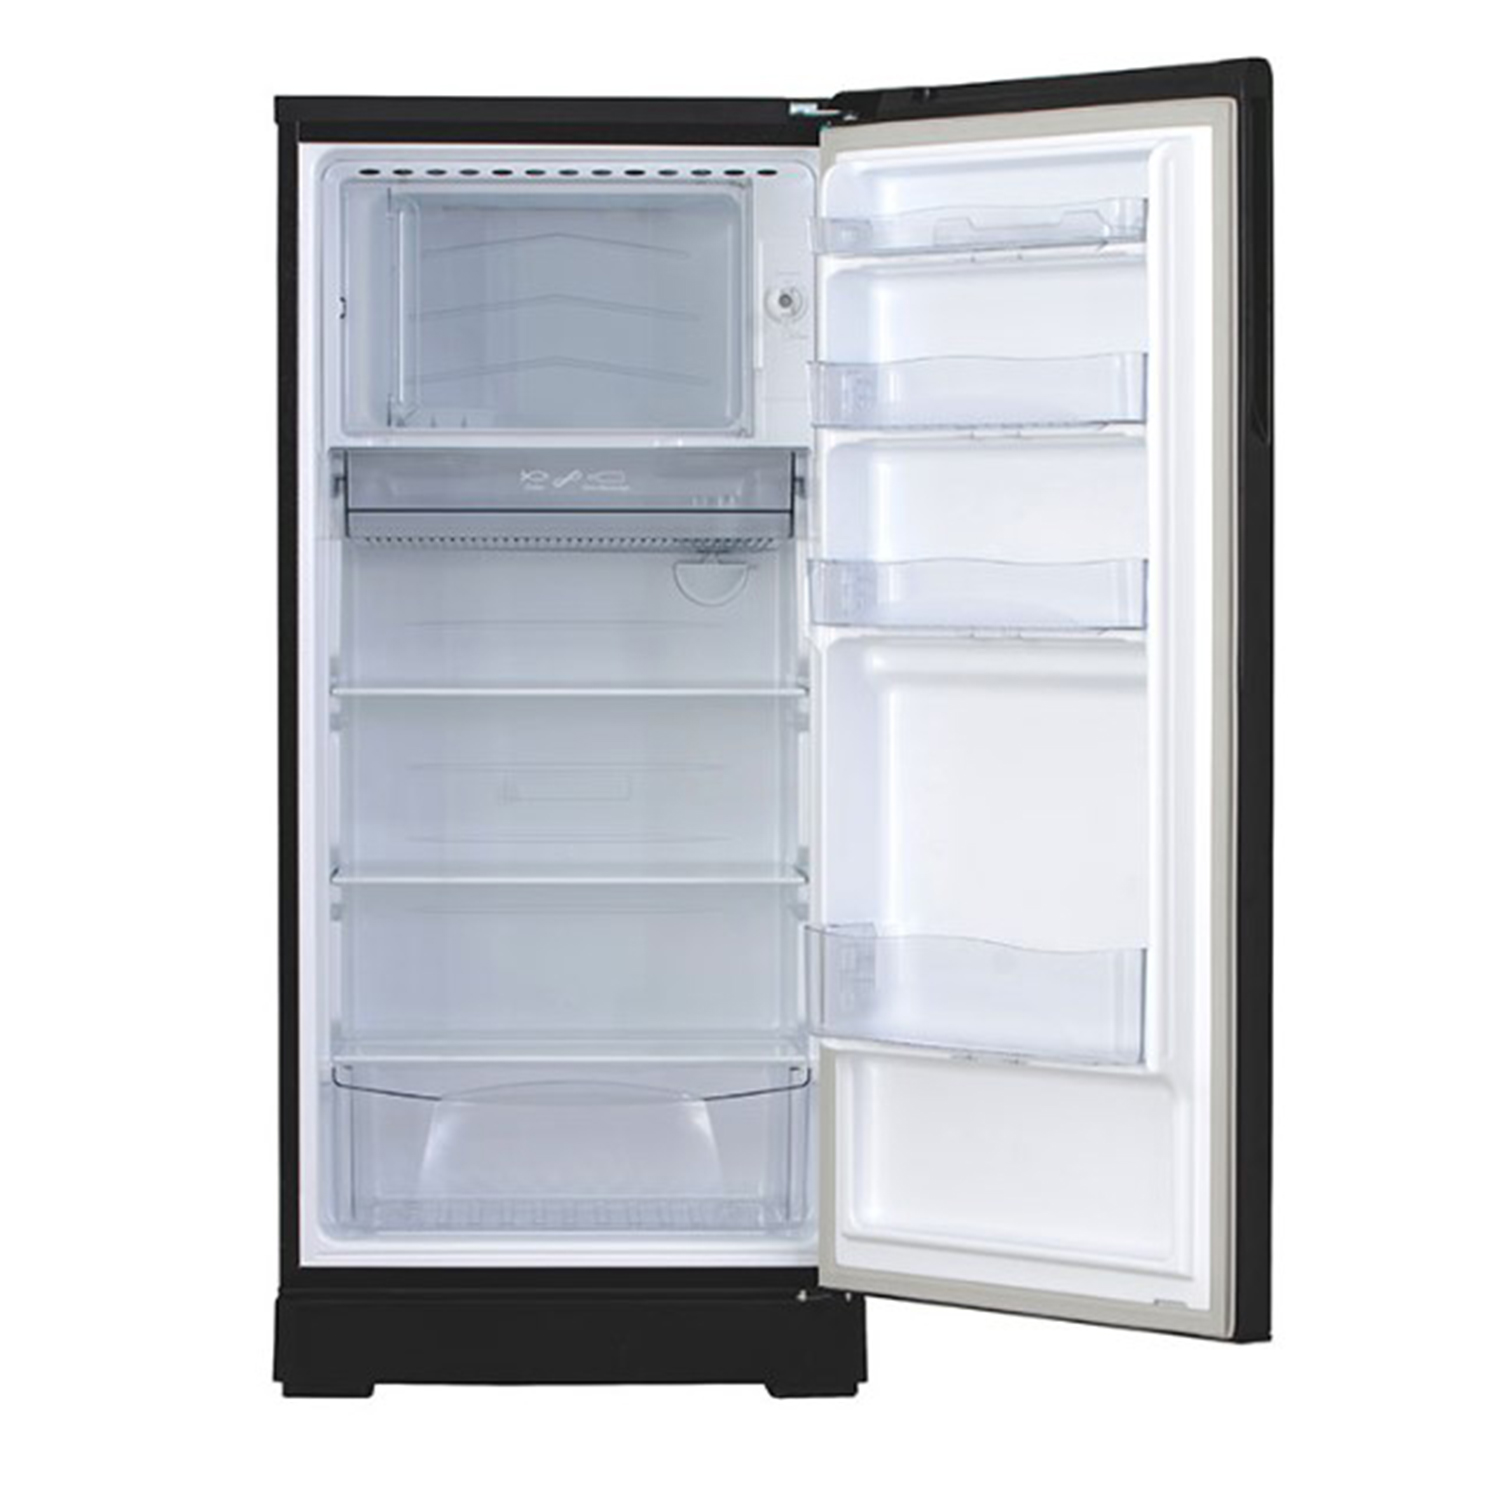 Refrigerator Haier Chic Series 